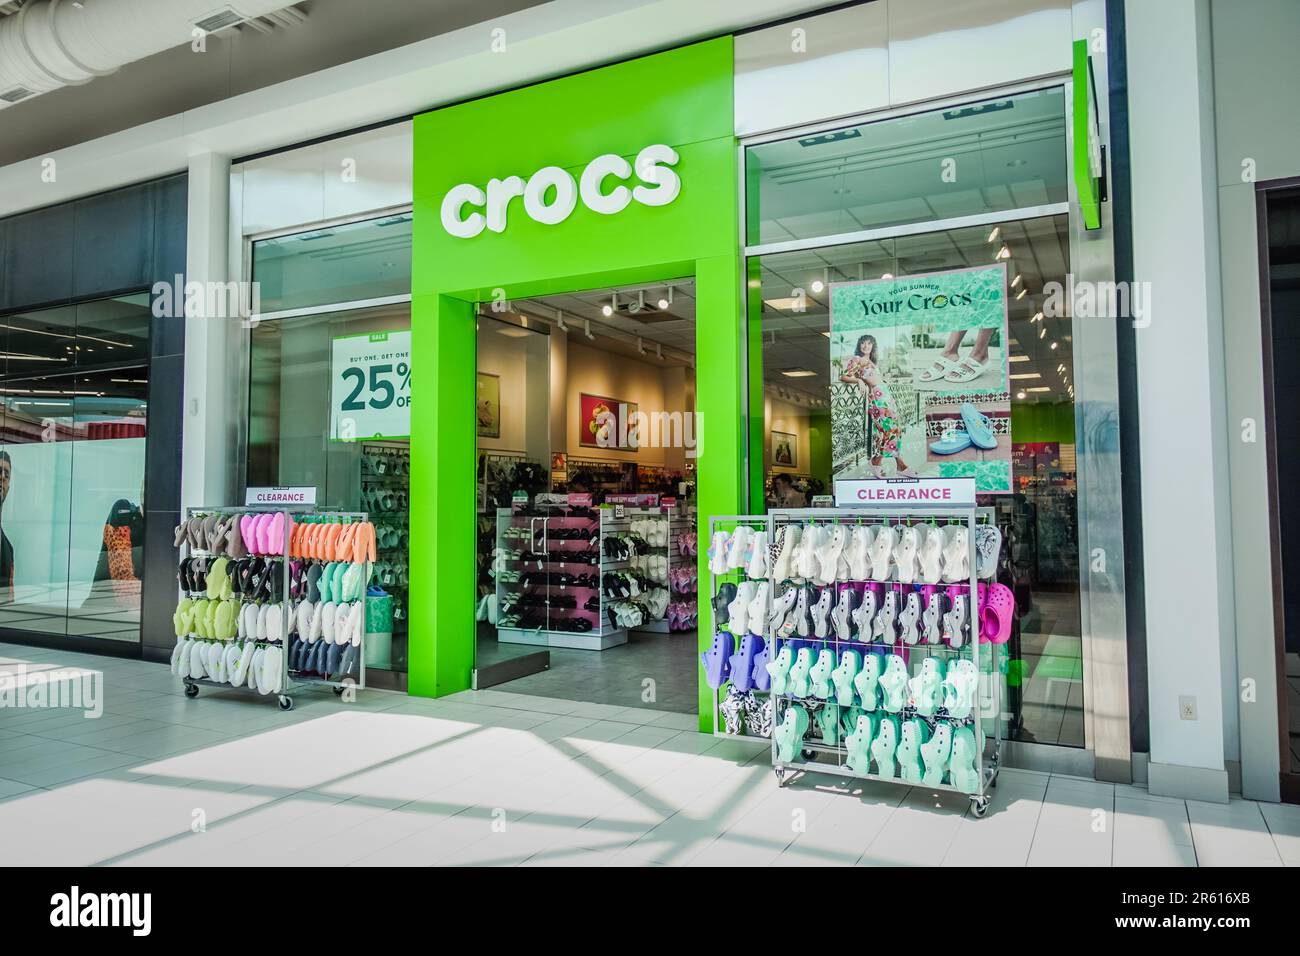 Crocs, american footwear company, retail store entrance Stock Photo - Alamy